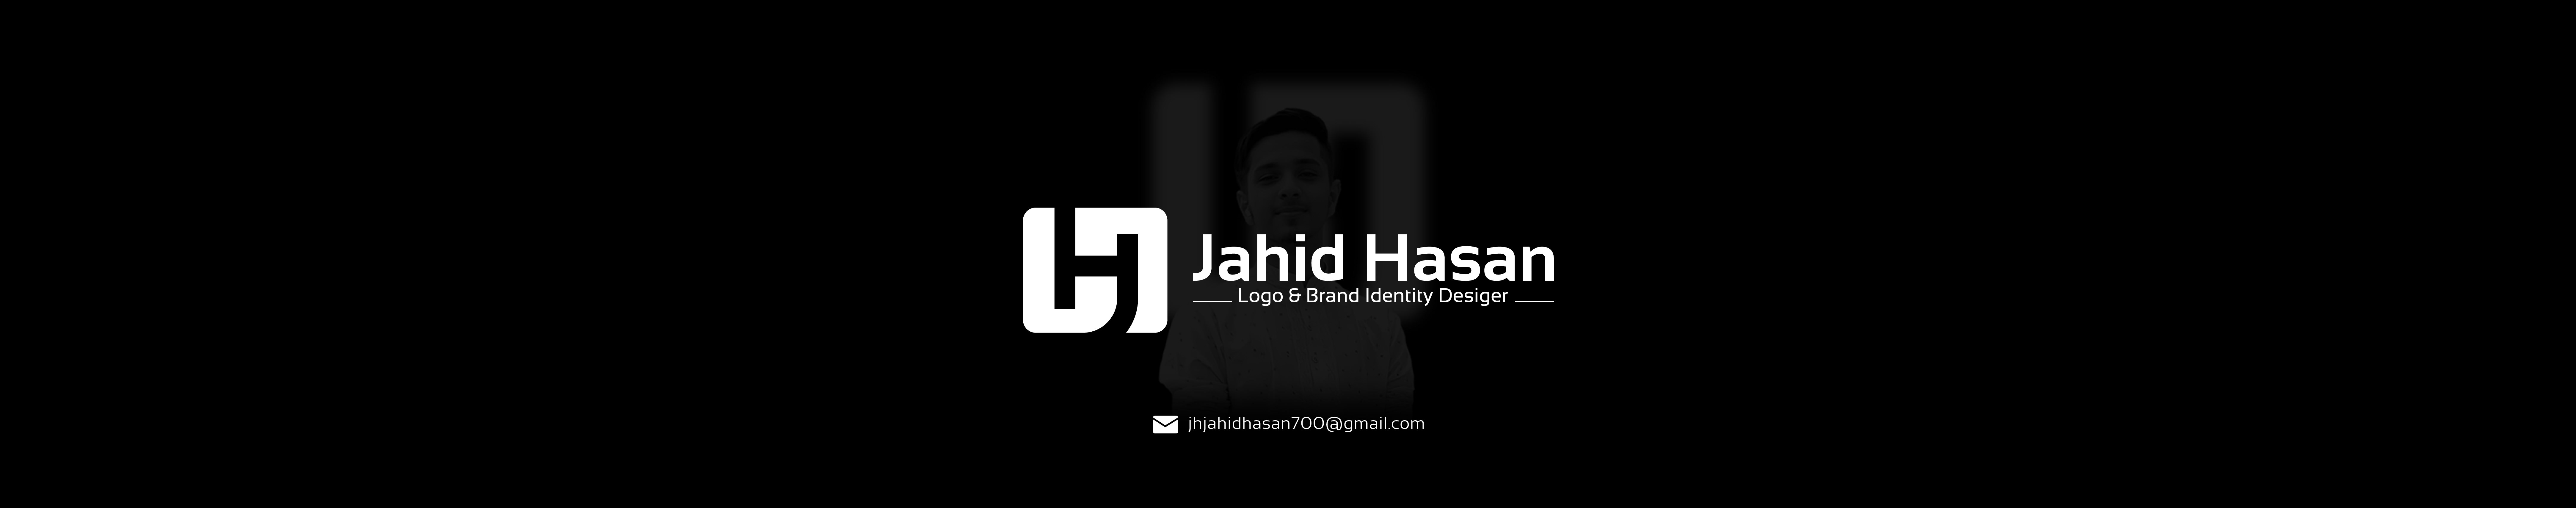 Jahid Hasan's profile banner